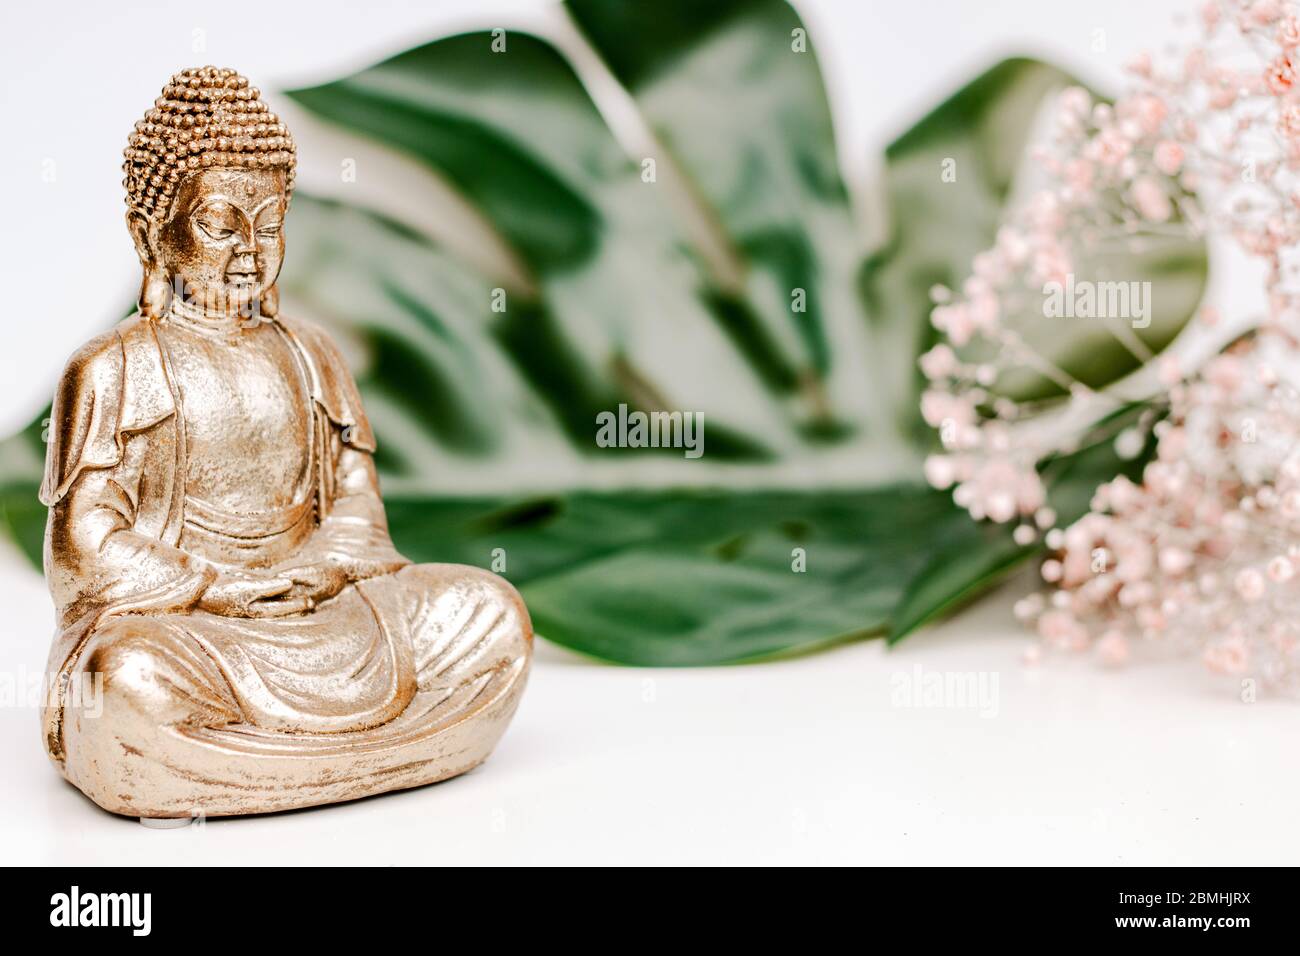 Golden buddha statue, gold buddha, meditating concept, calm, buddhism, inspiring, inspiration, flatlay, white background, blogging photo, blog, yoga, Stock Photo